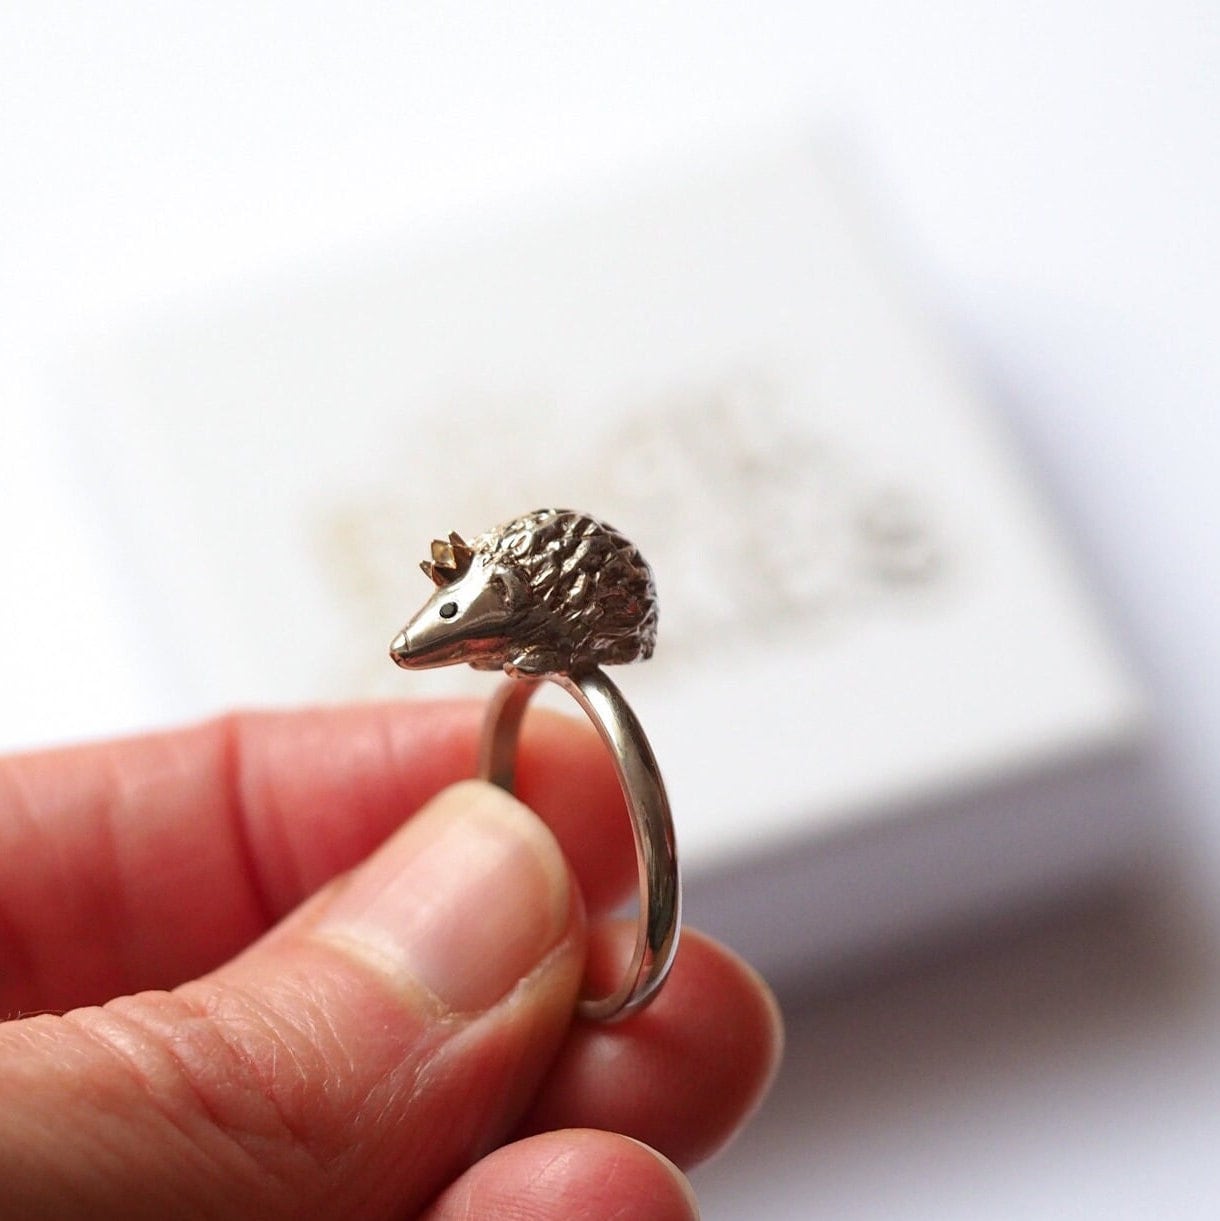 Hedgehog Ring